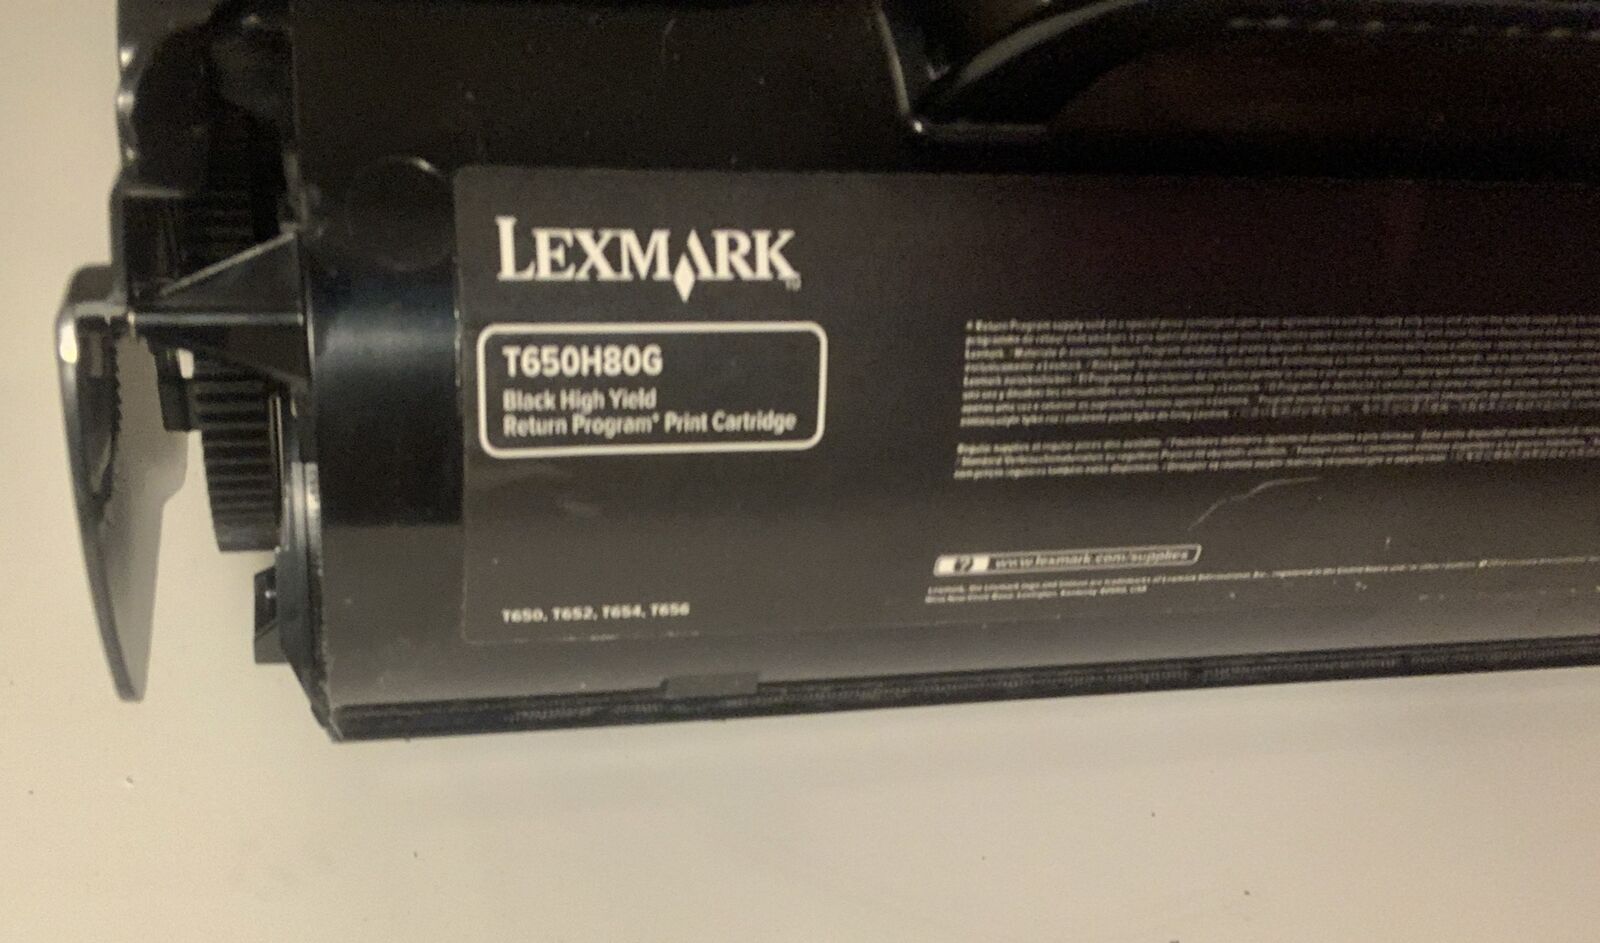 *CHEAPEST* LEXMARK T650h80g T652 T654 T656 Black High Yield TONER CARTRIDGE